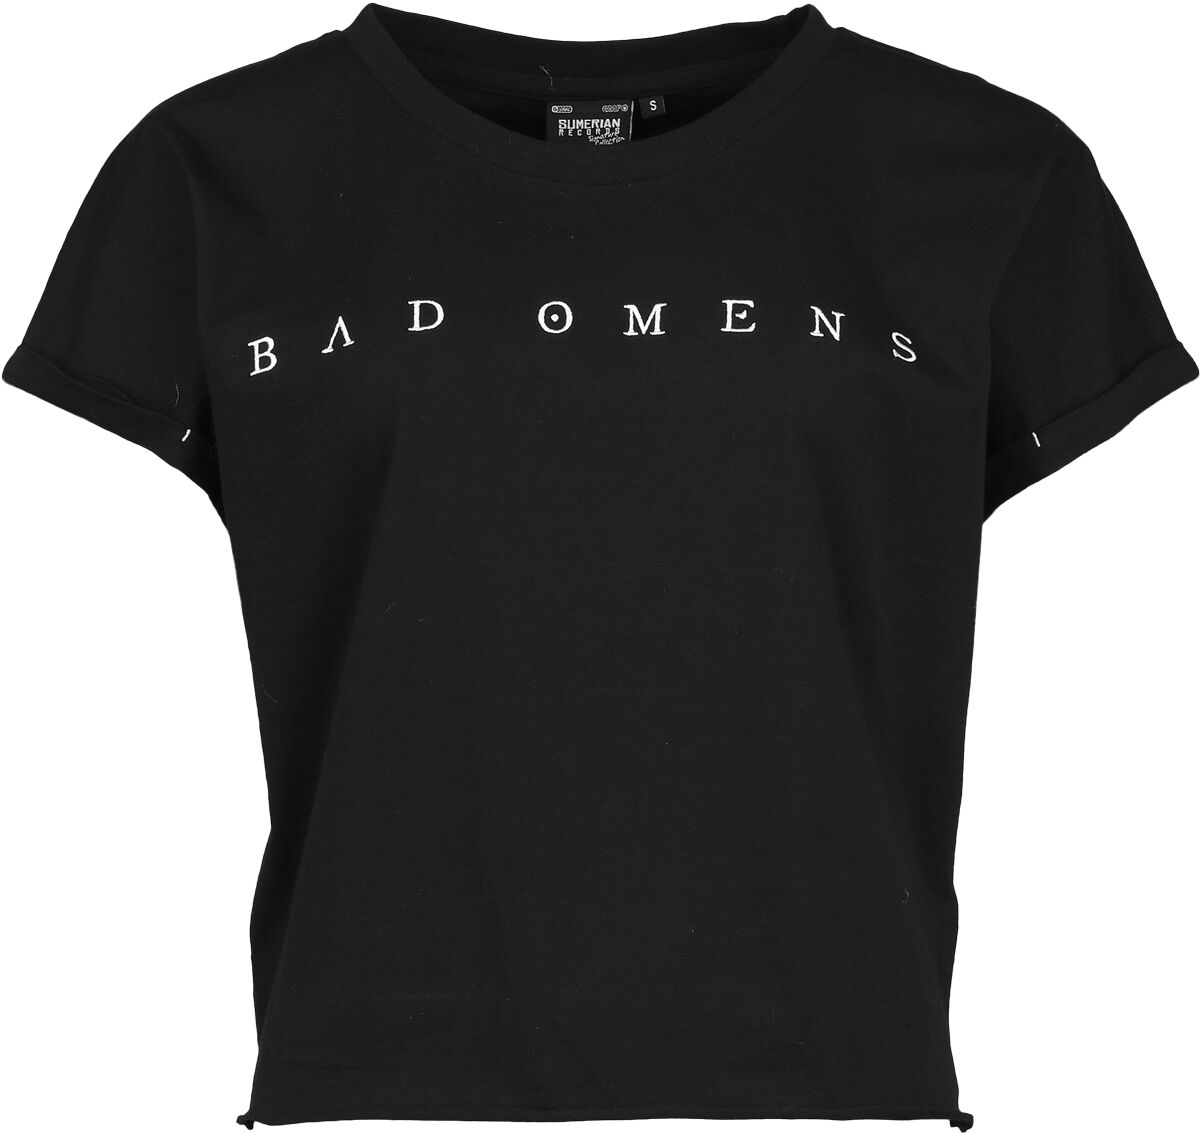 Bad Omens - EMP Signature Collection - T-Shirt - schwarz - EMP Exklusiv!